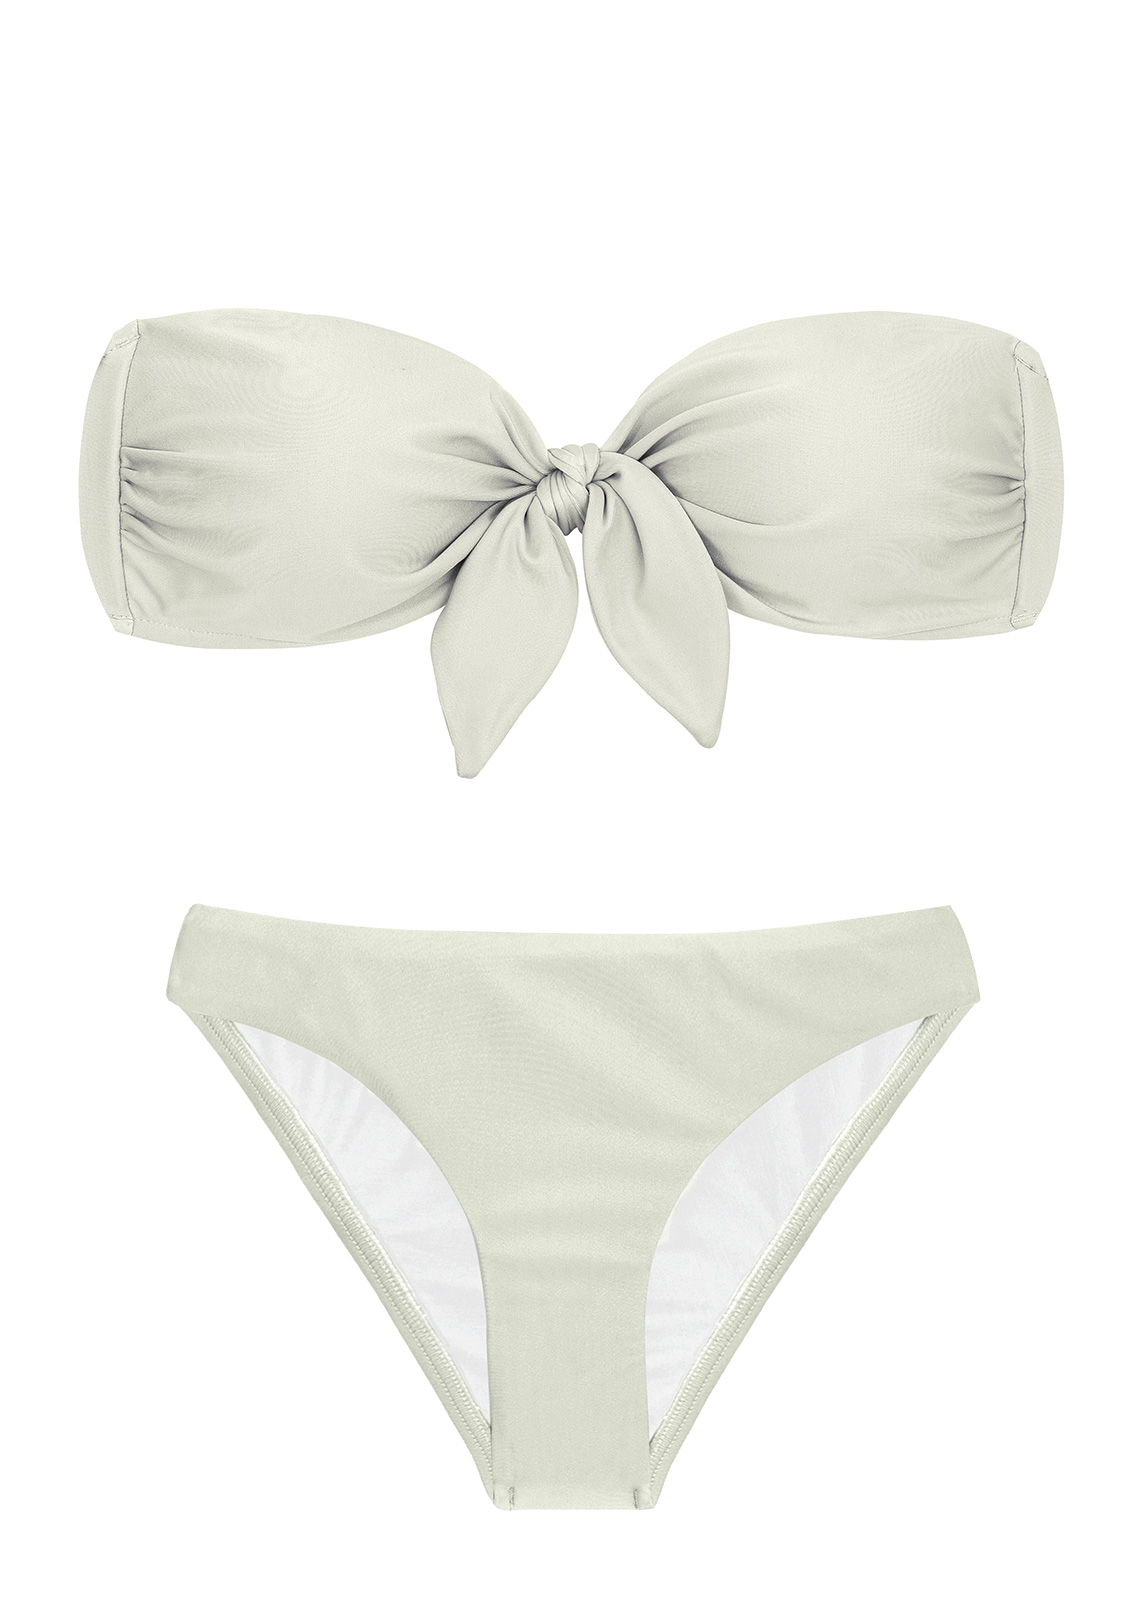 Broken White Fixed Bikini With A Bandeau Top - Perola Band Comfort ...